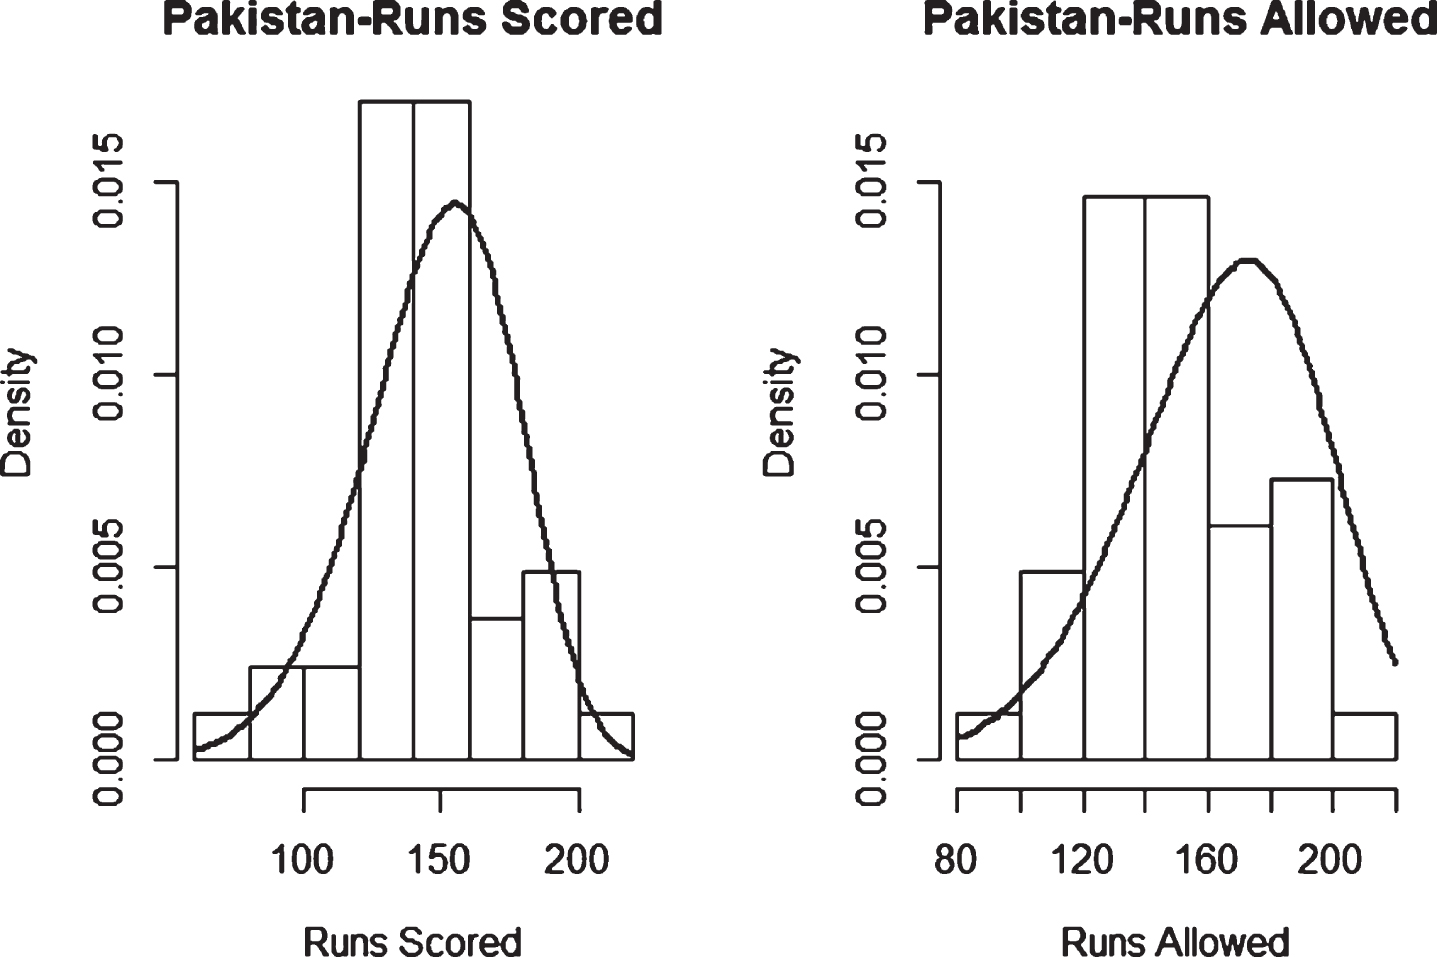 Weibull Distribution Fit for Runs Scored and Runs Allowed for Pakistan using Maximum Likelihood Method (Twenty20).